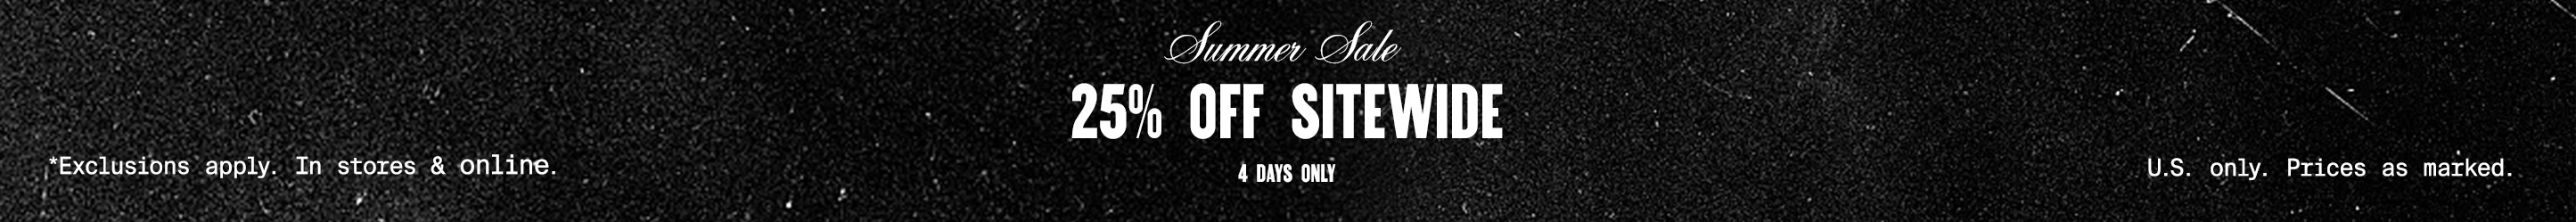 Summer Sale. 25% off Sitewide